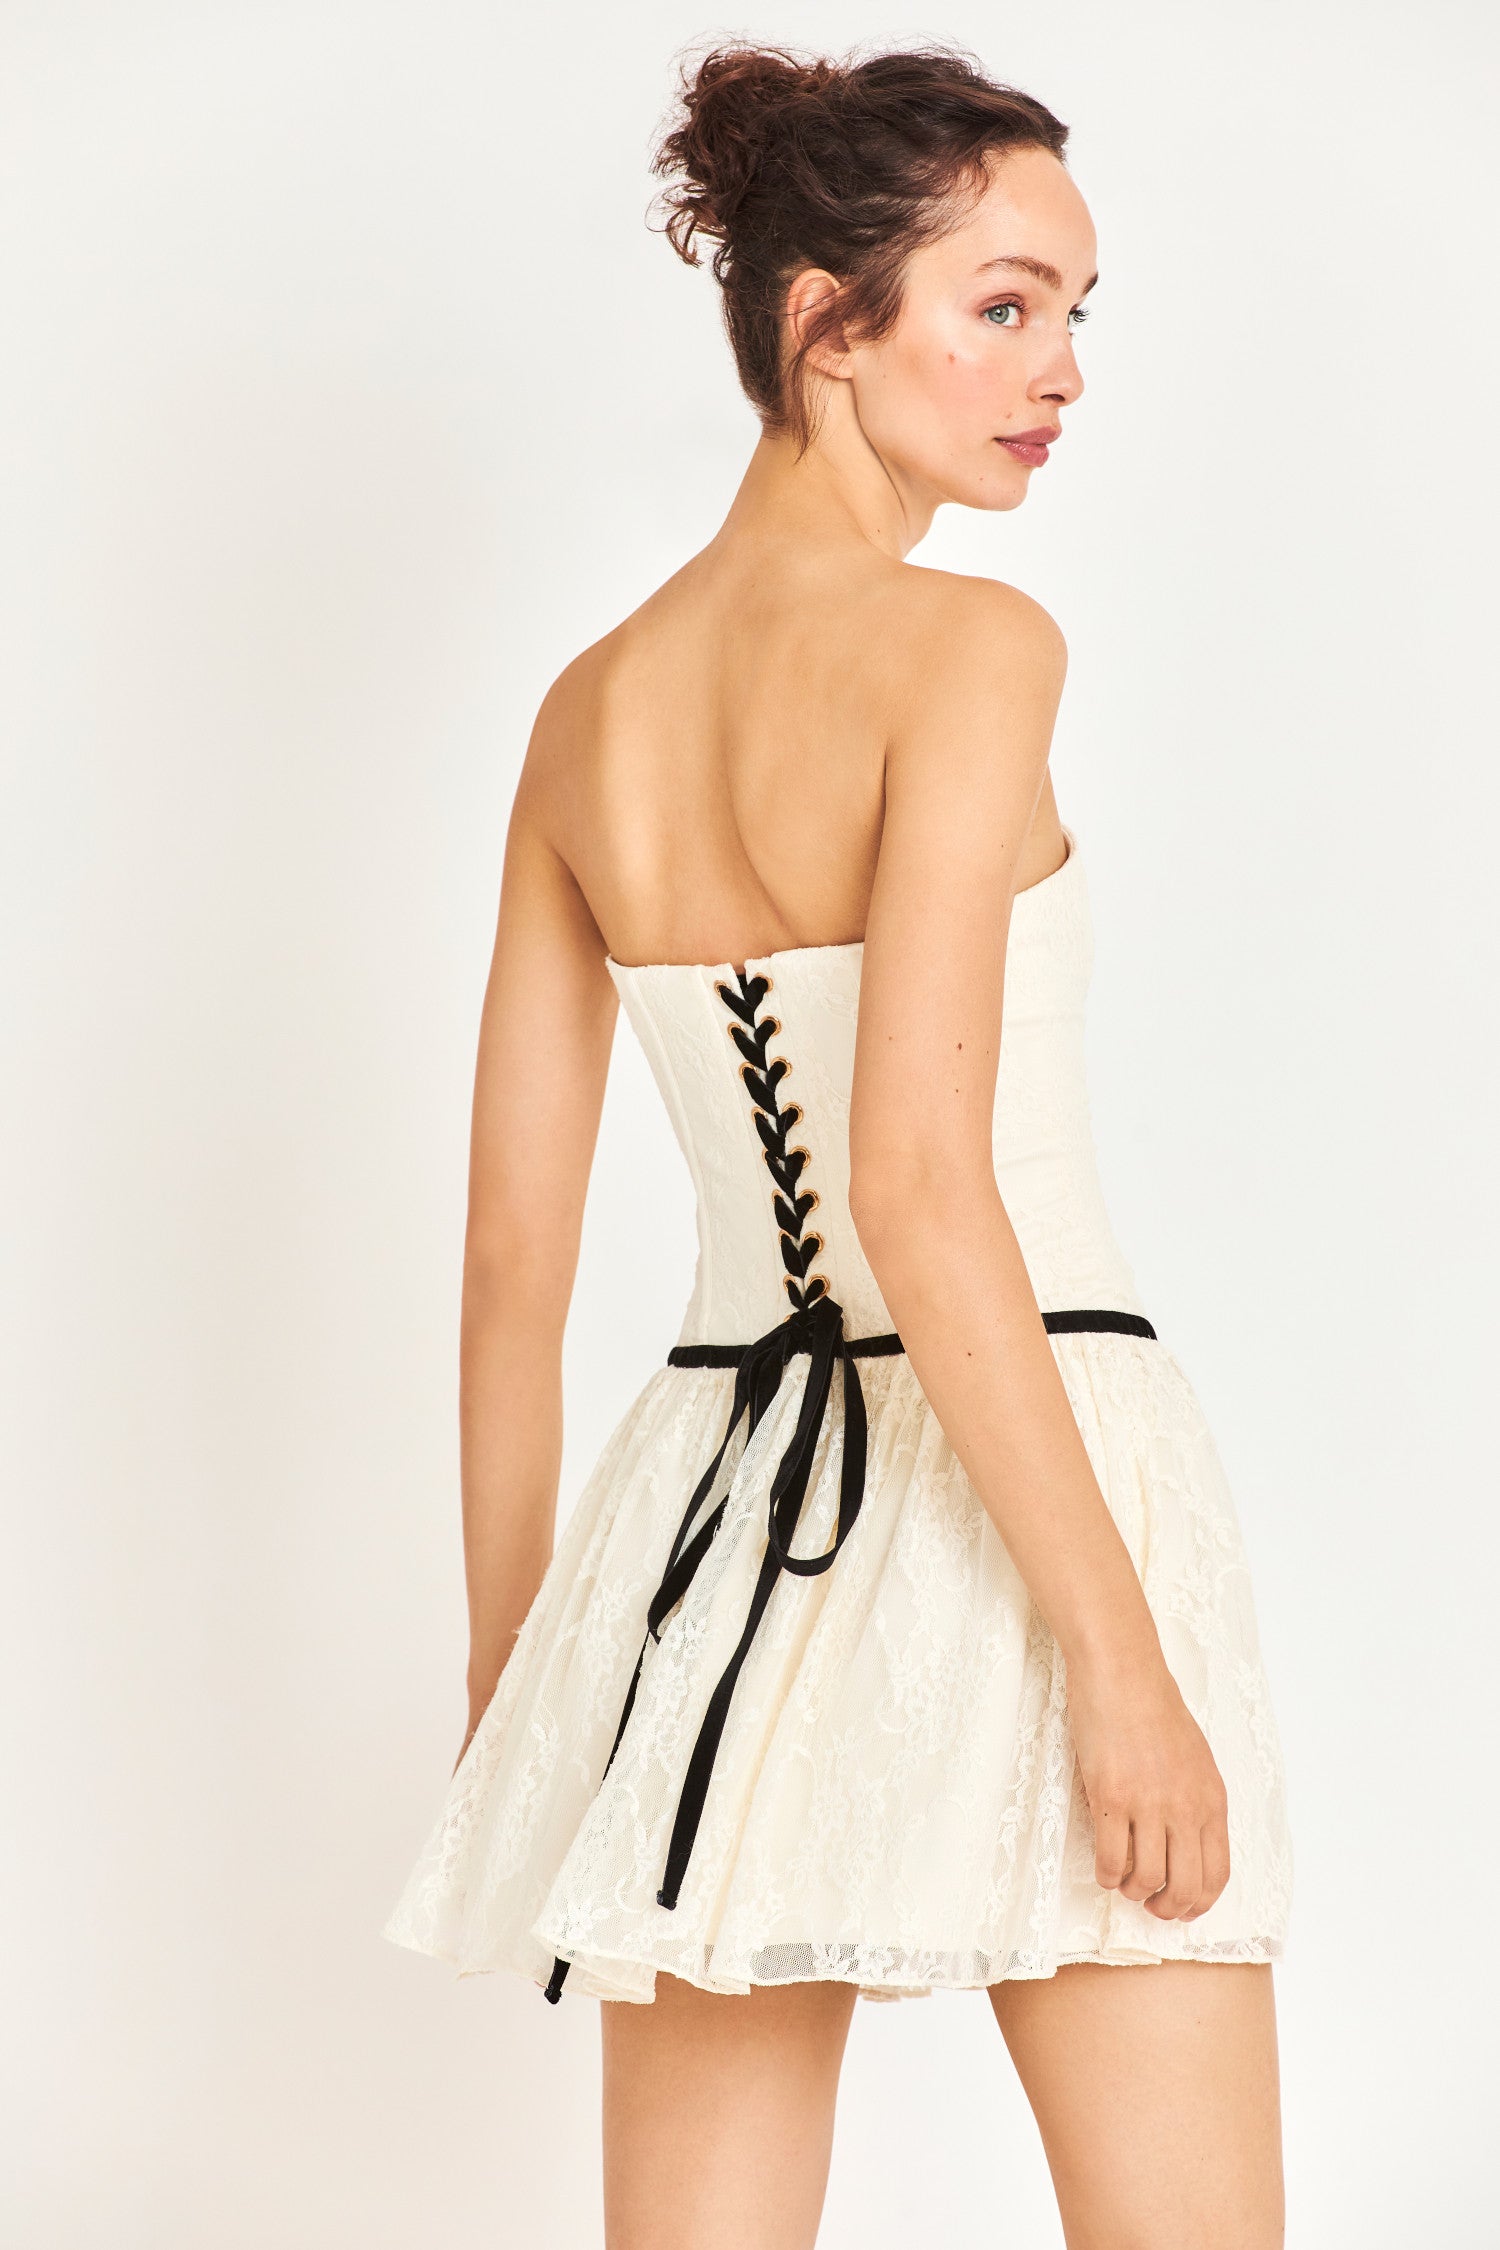 Back image showing lace up detail on white mini dress